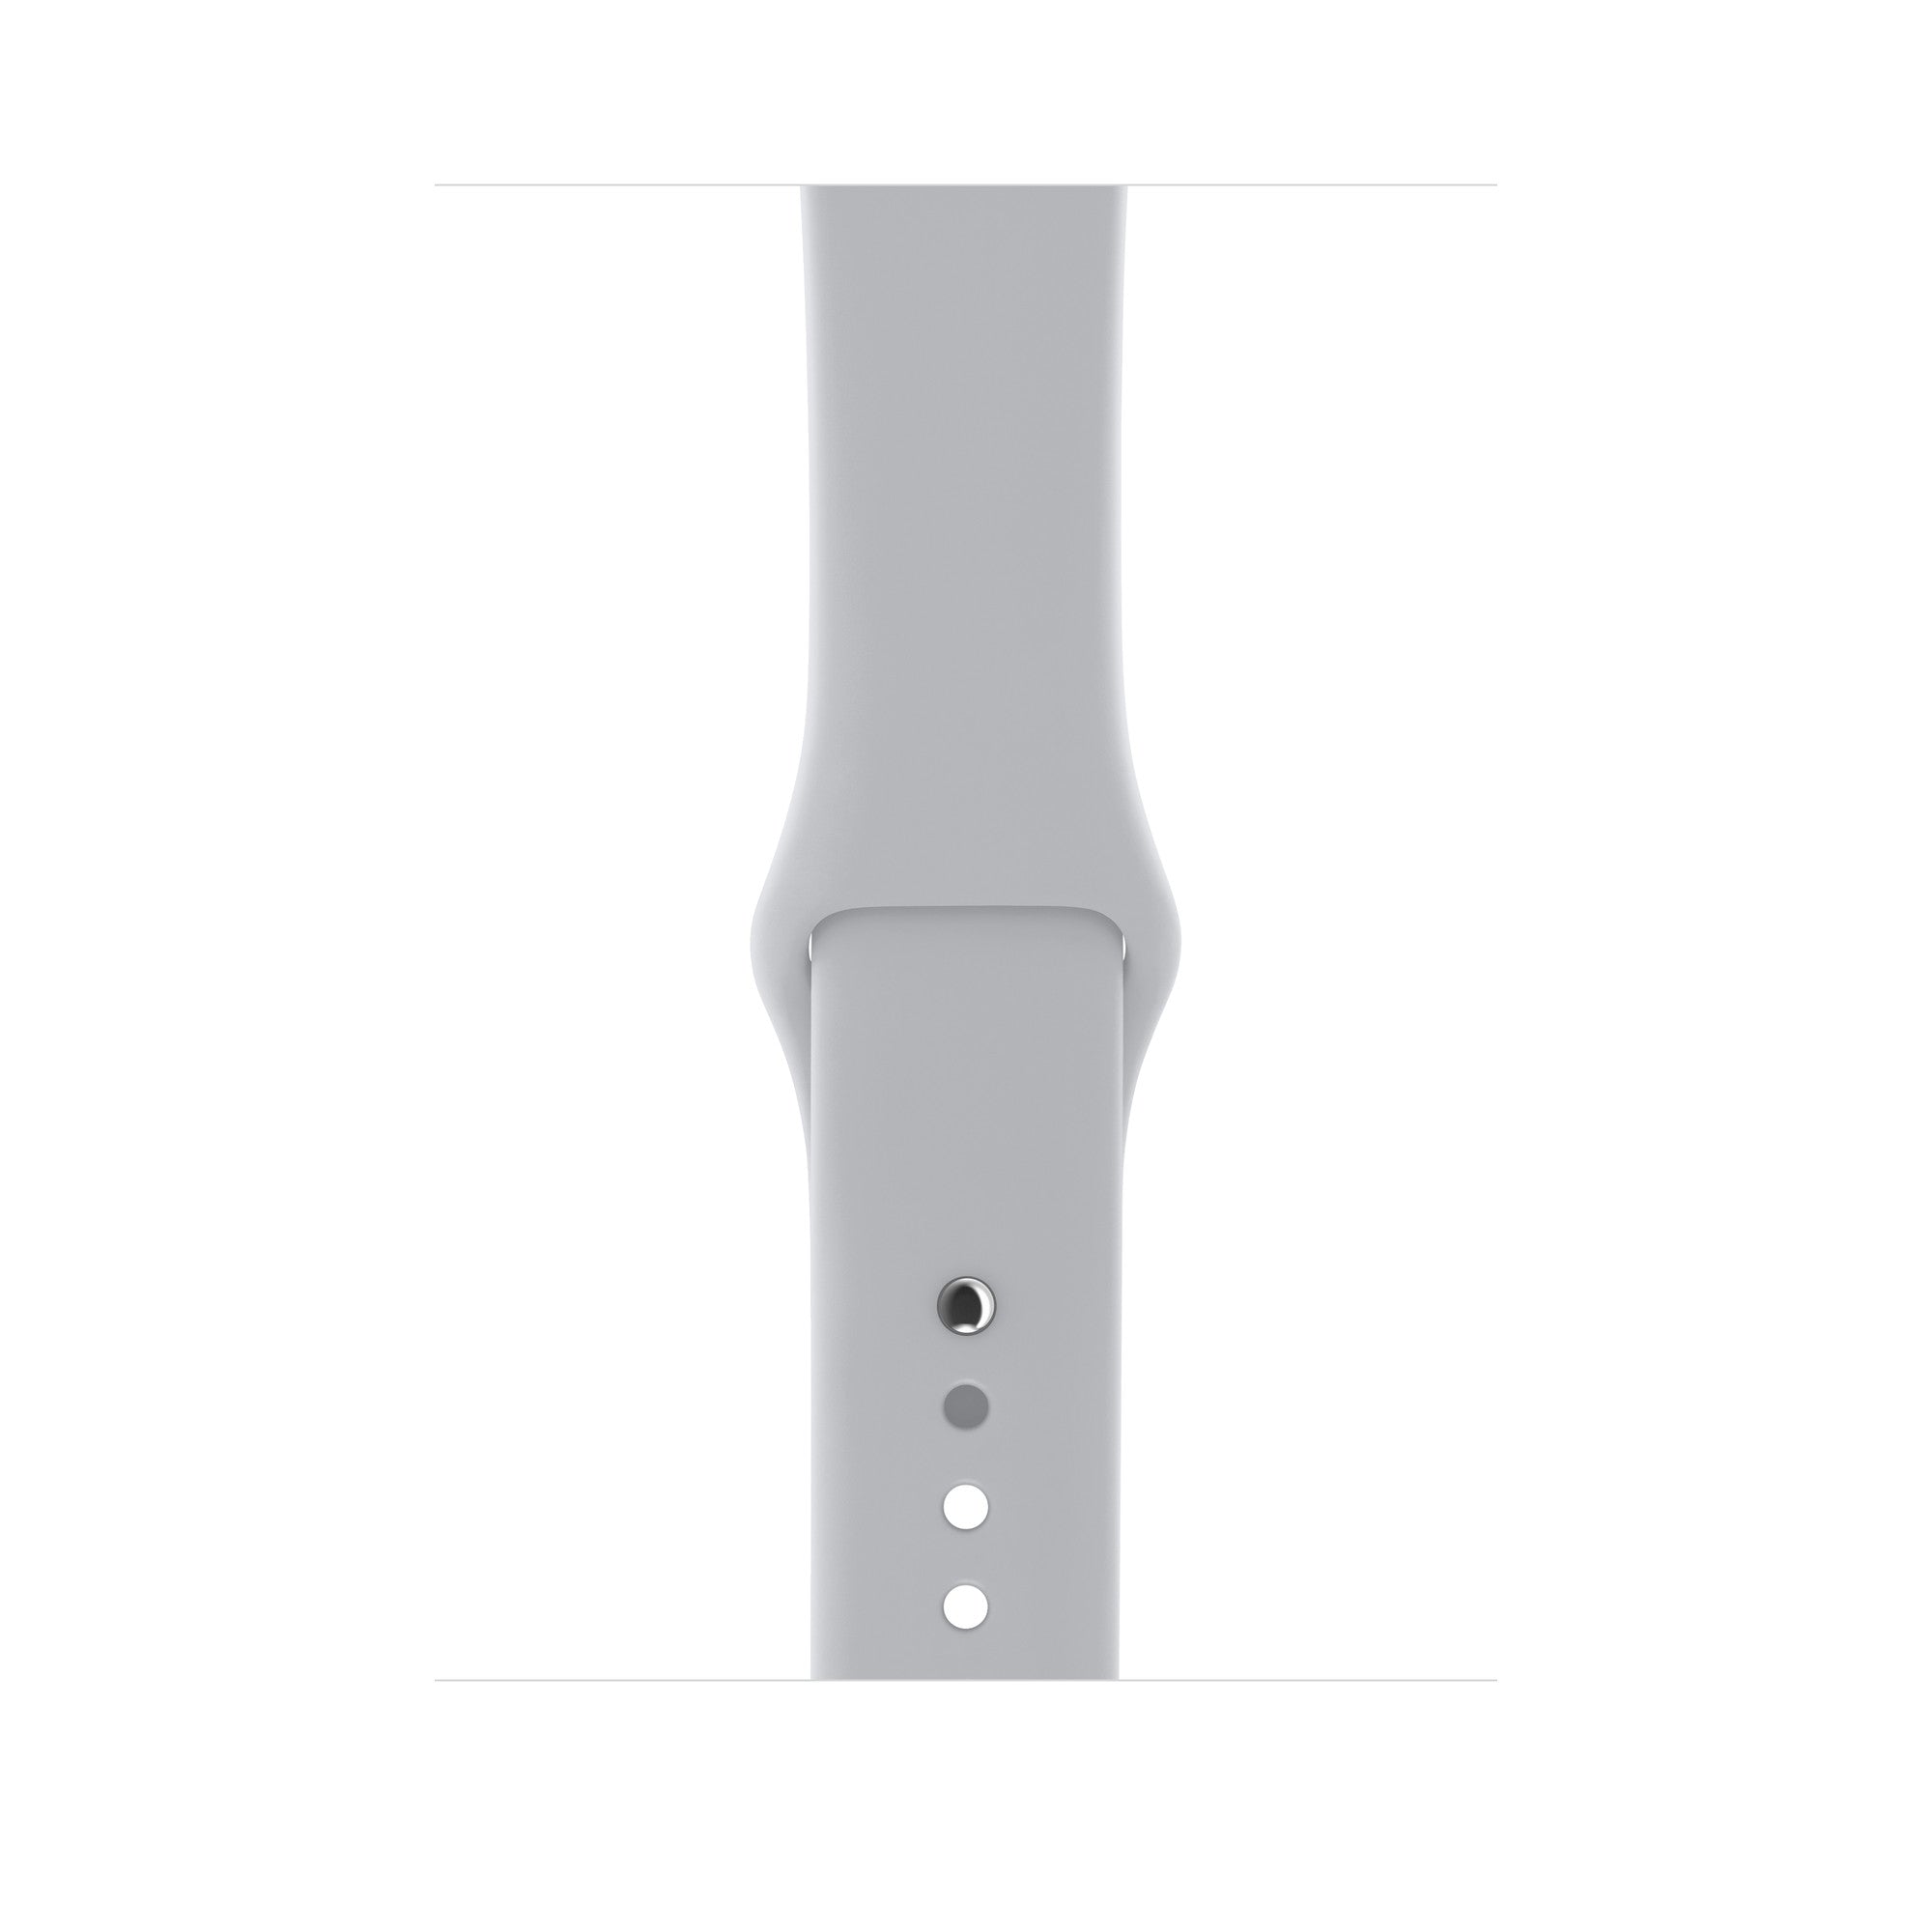 Apple Watch Series 3 GPS, 38mm Silver Aluminum Case